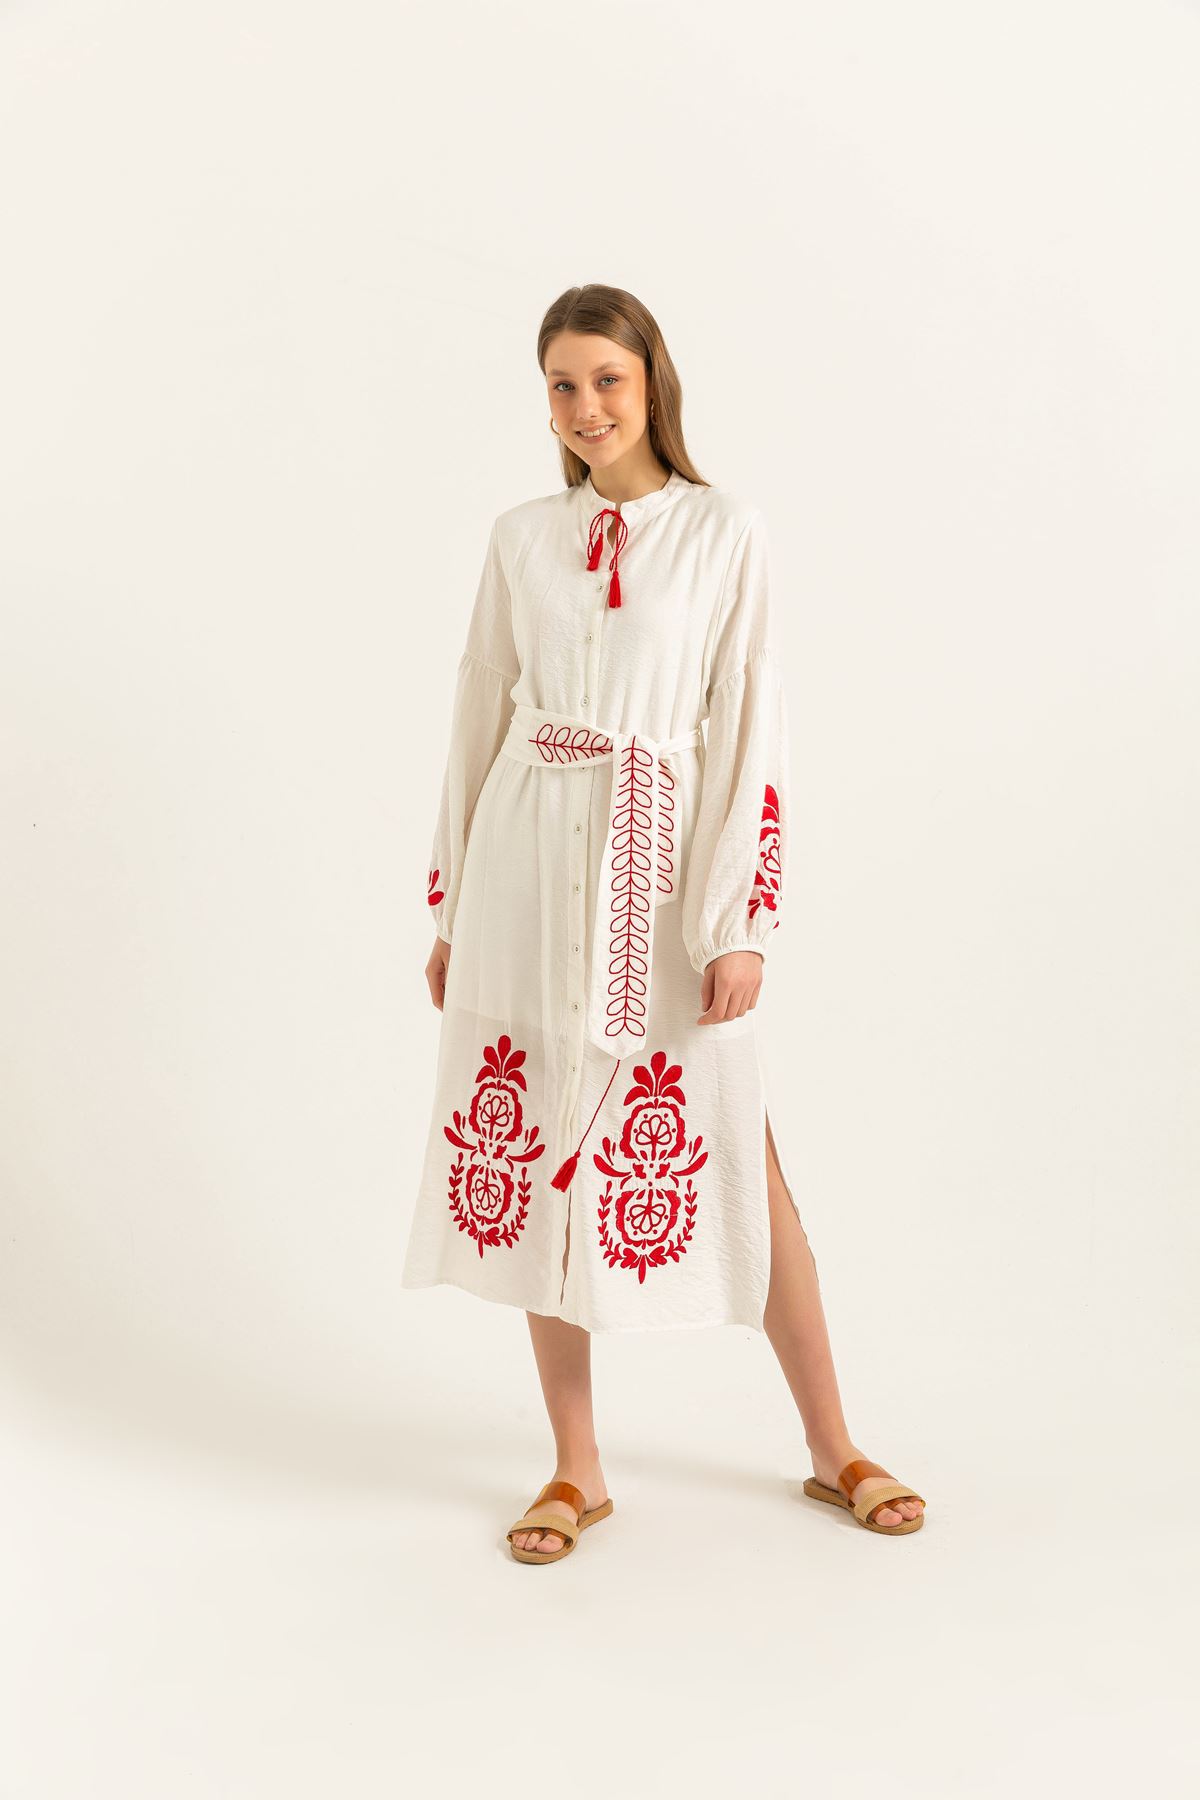 Linen Fabric Band Collar Embroidery detailed Long Midi Dress-Ecru